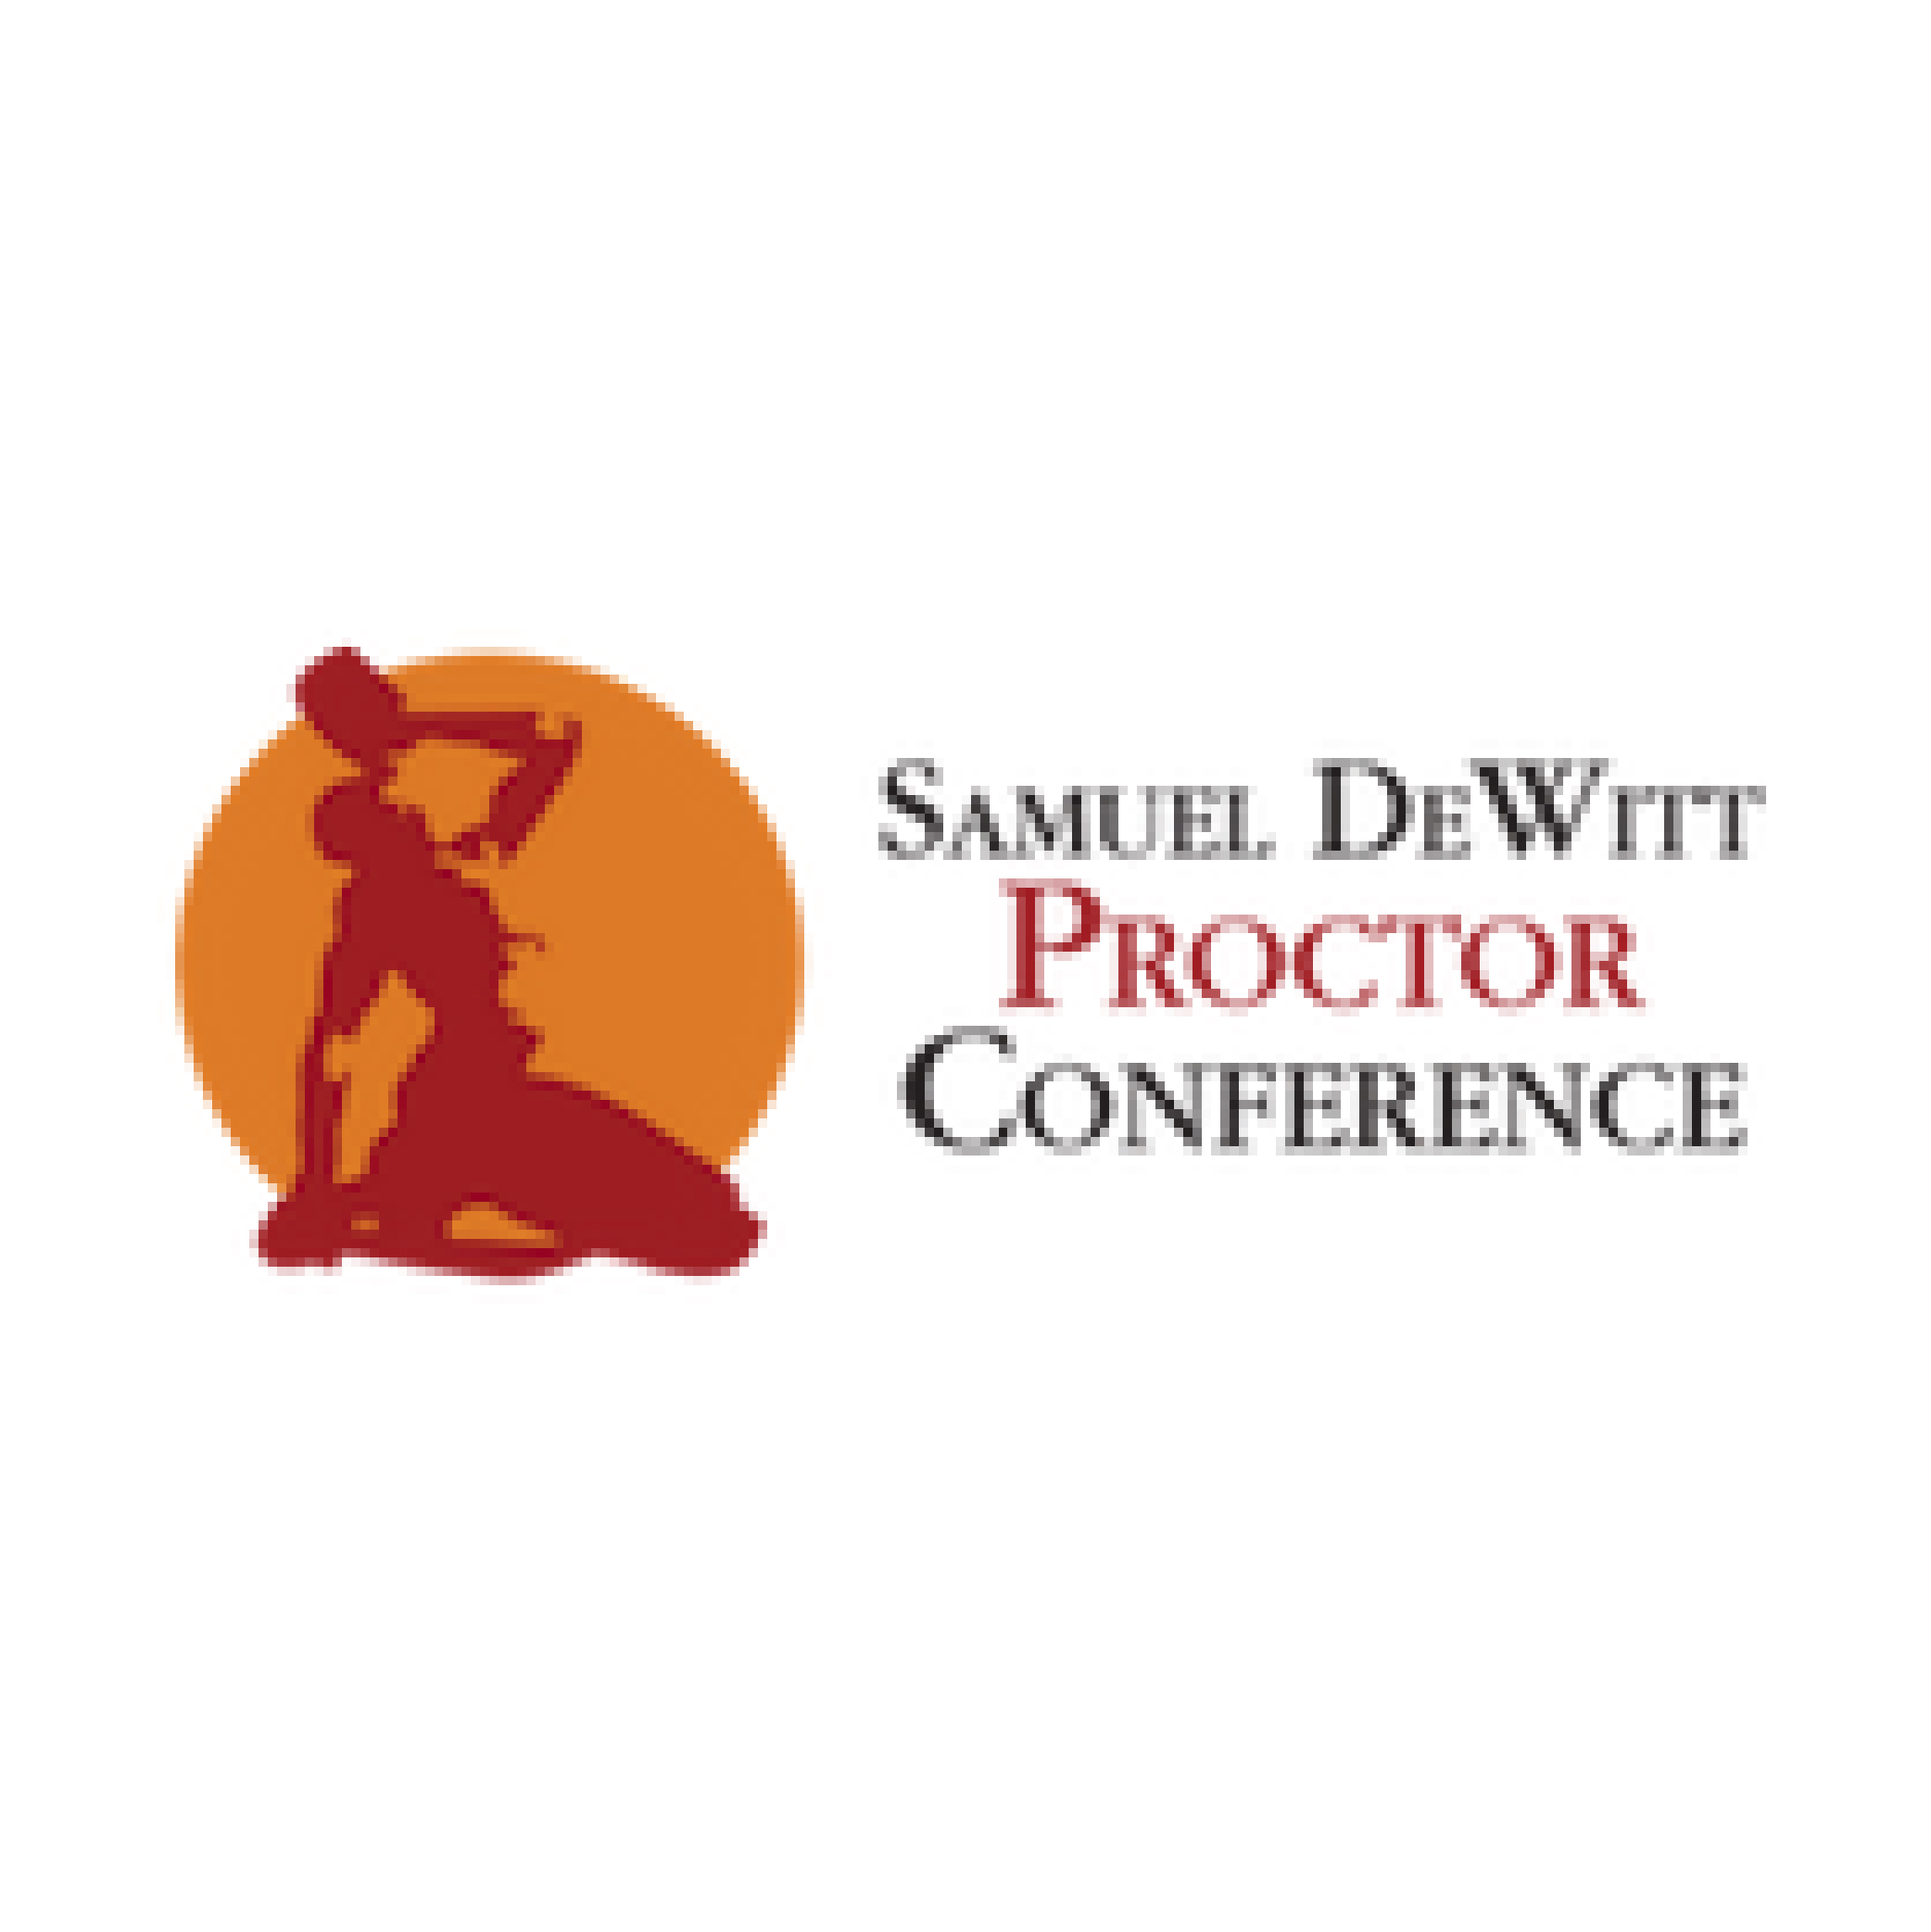 Samuel DeWitt Proctor Conference, Inc.